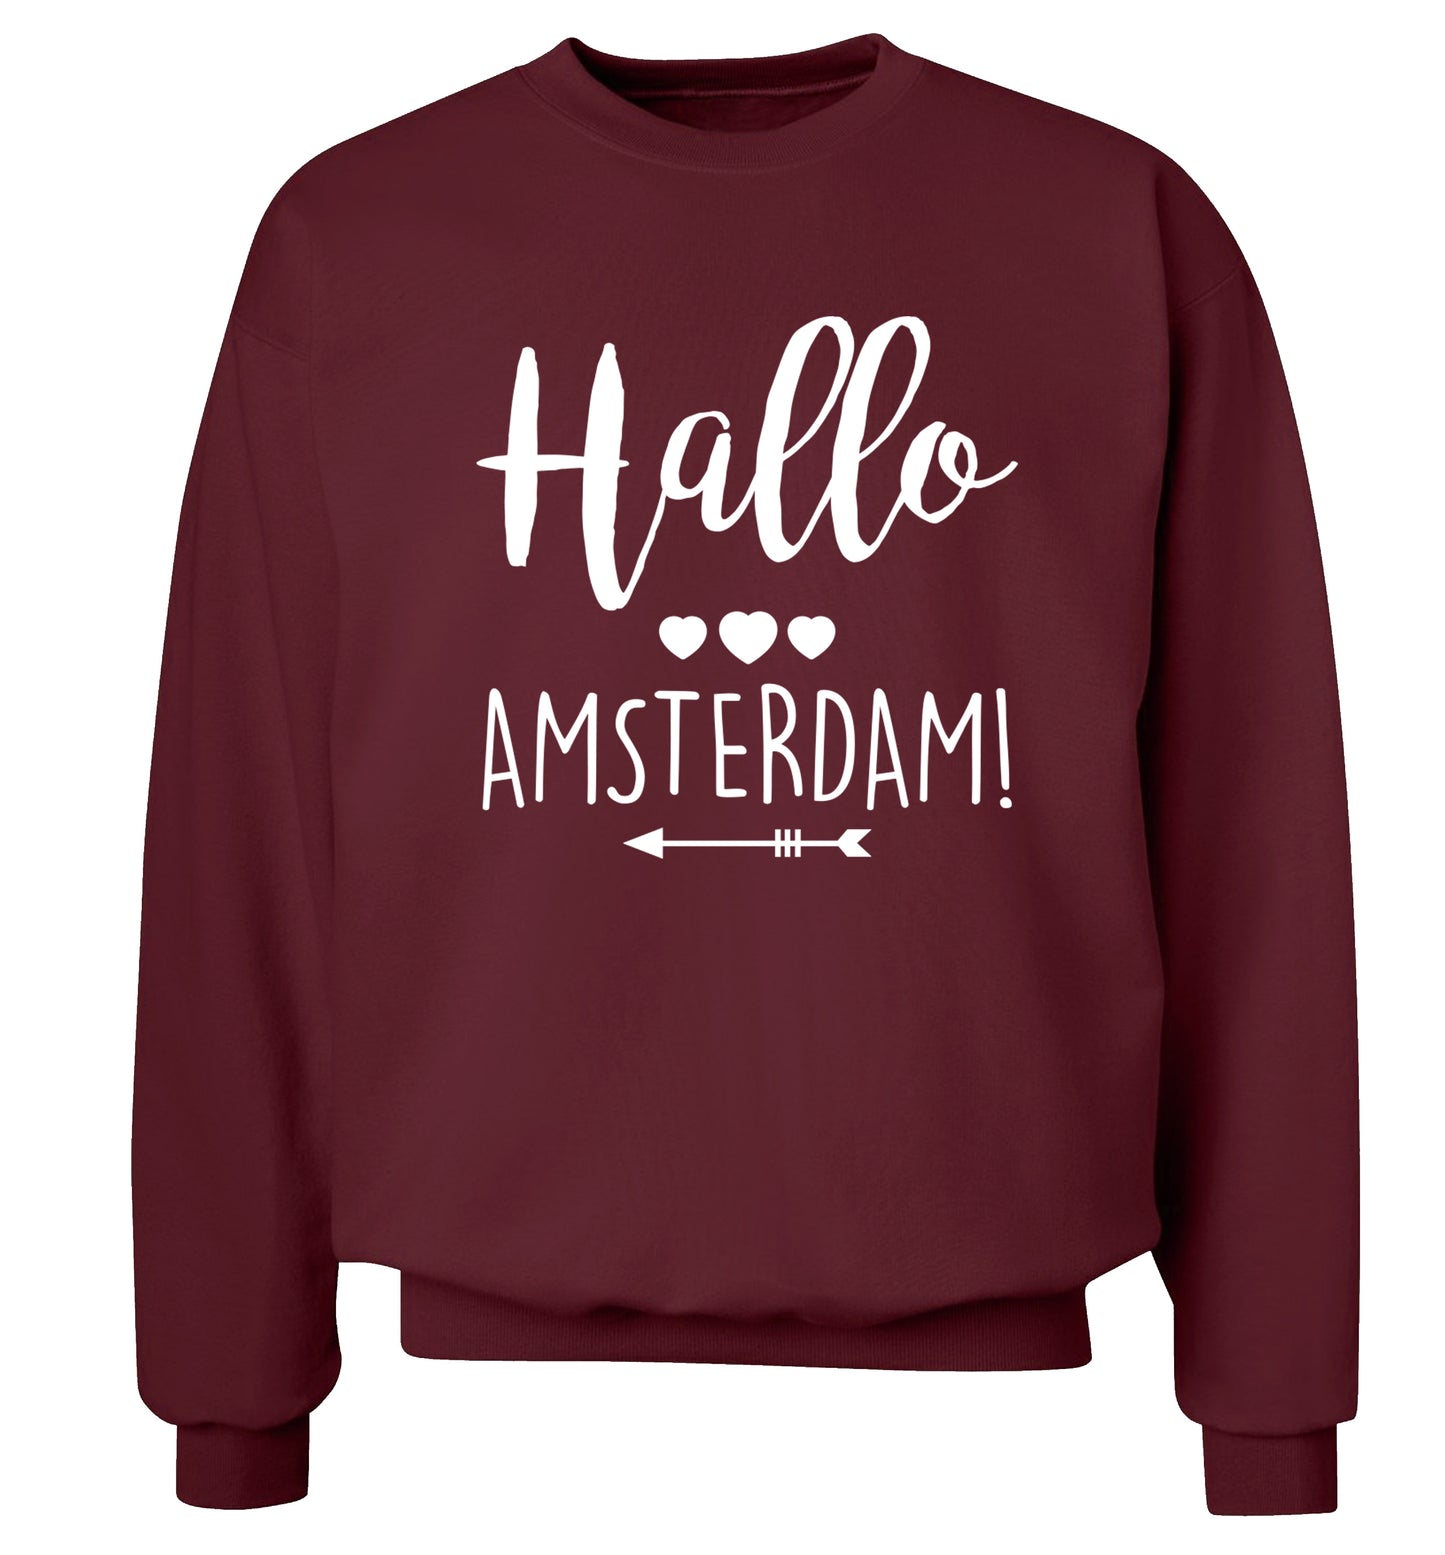 Hallo Amsterdam Adult's unisex maroon Sweater 2XL